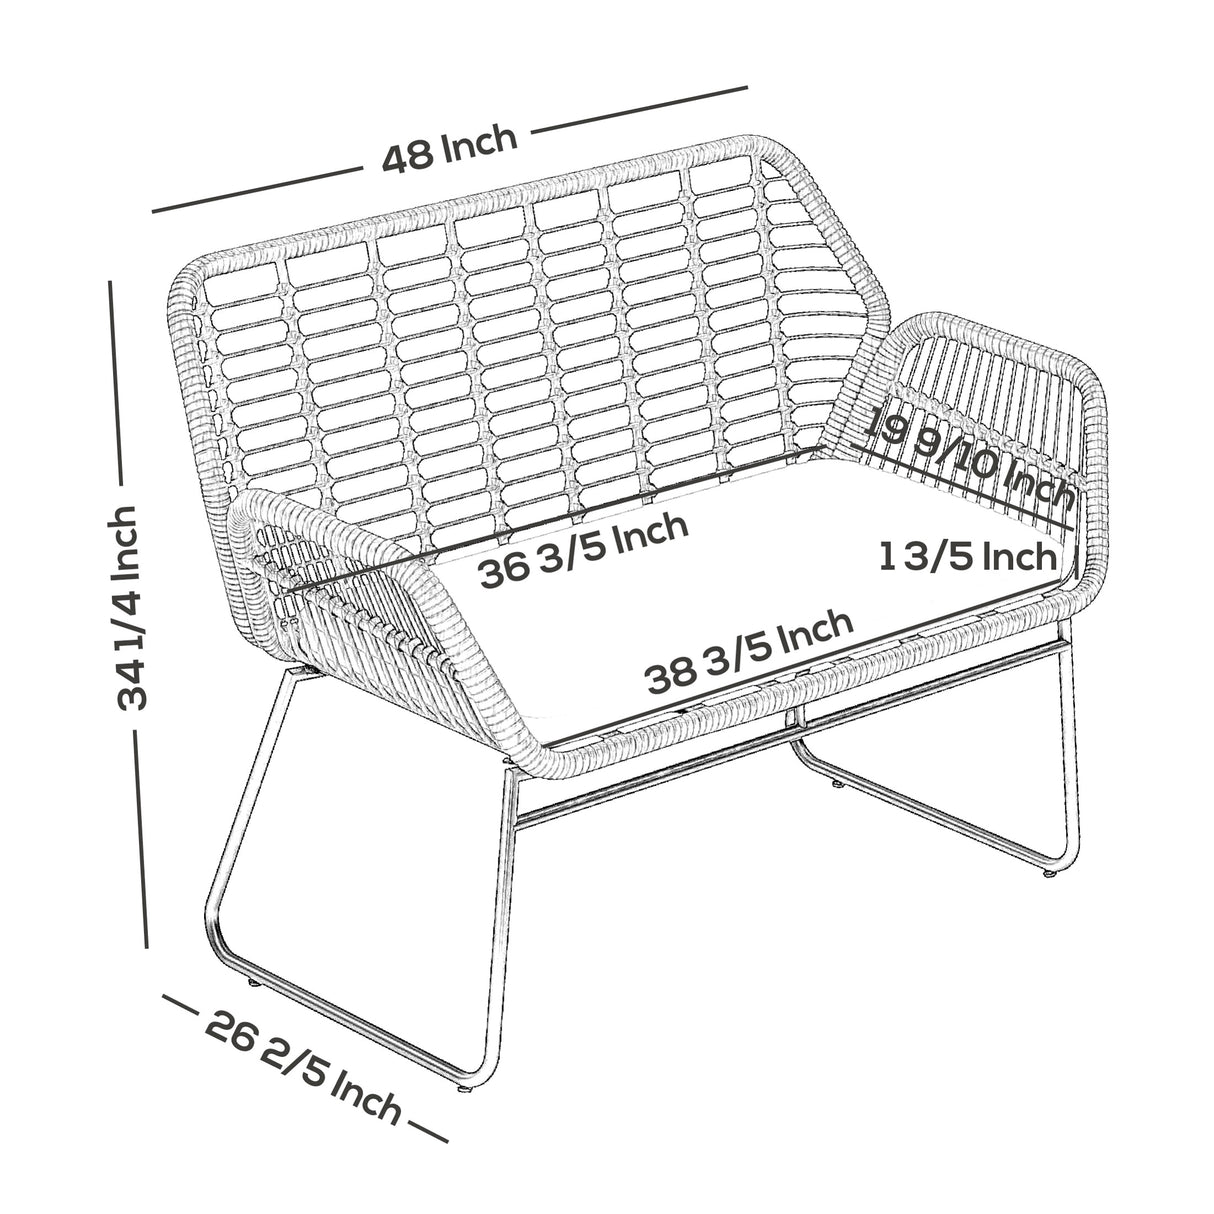 Arden 4-Piece Outdoor Wicker Patio Conversation Set with Cushions